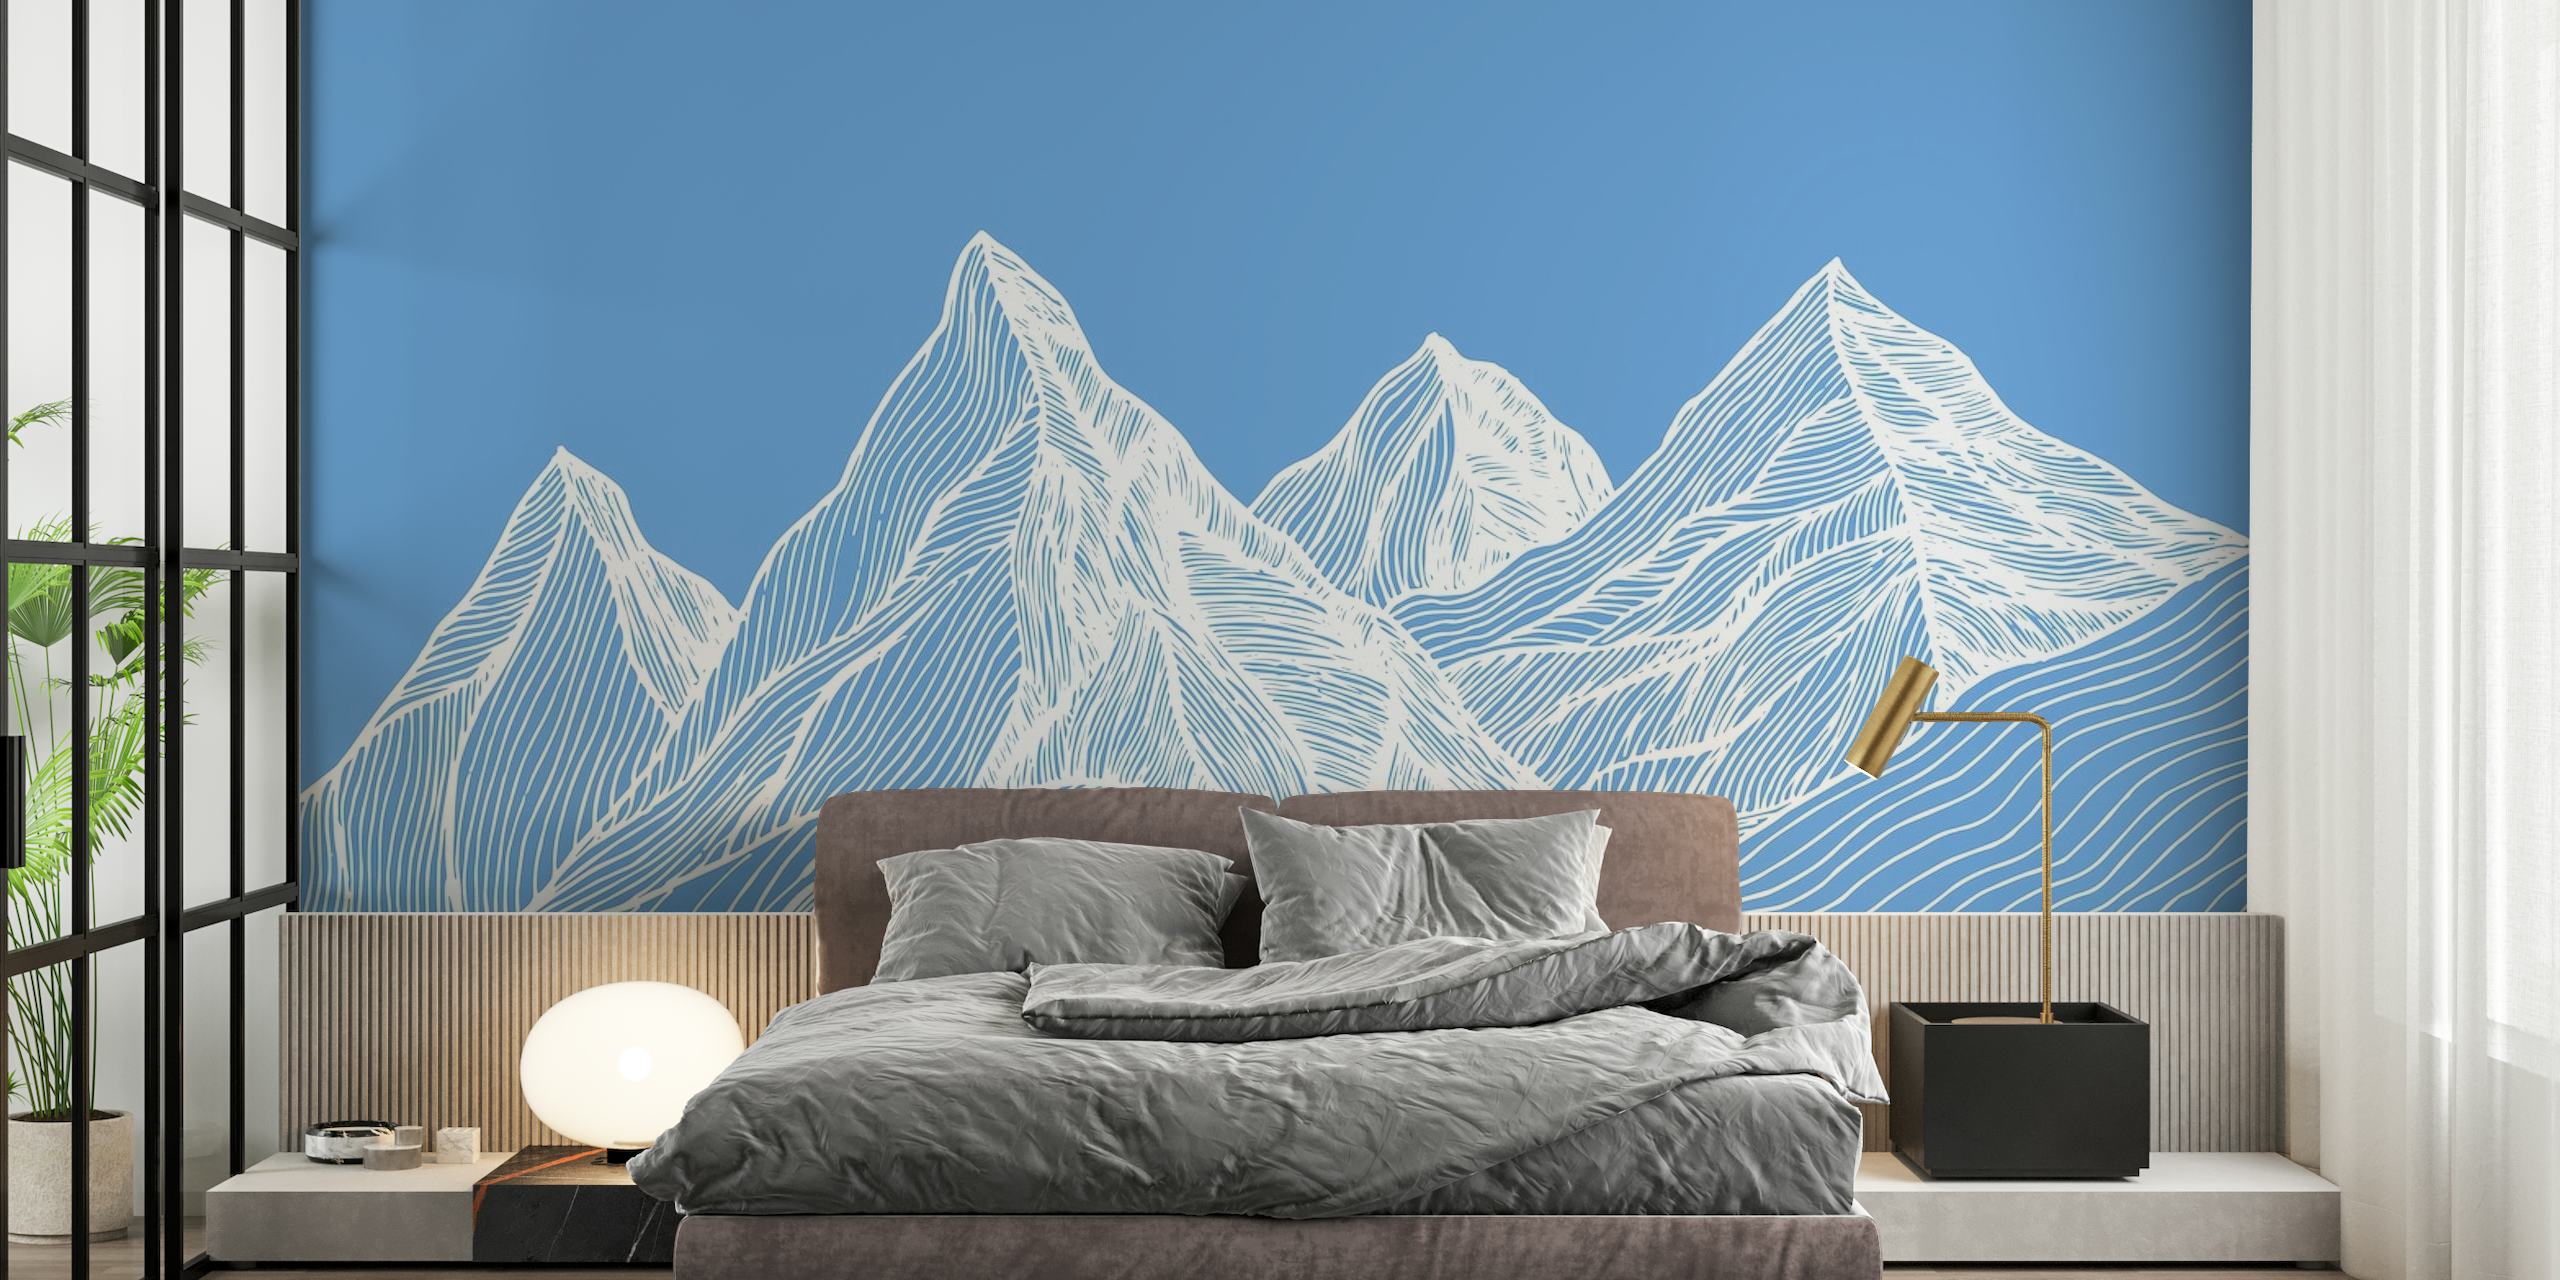 Line art mountains behang